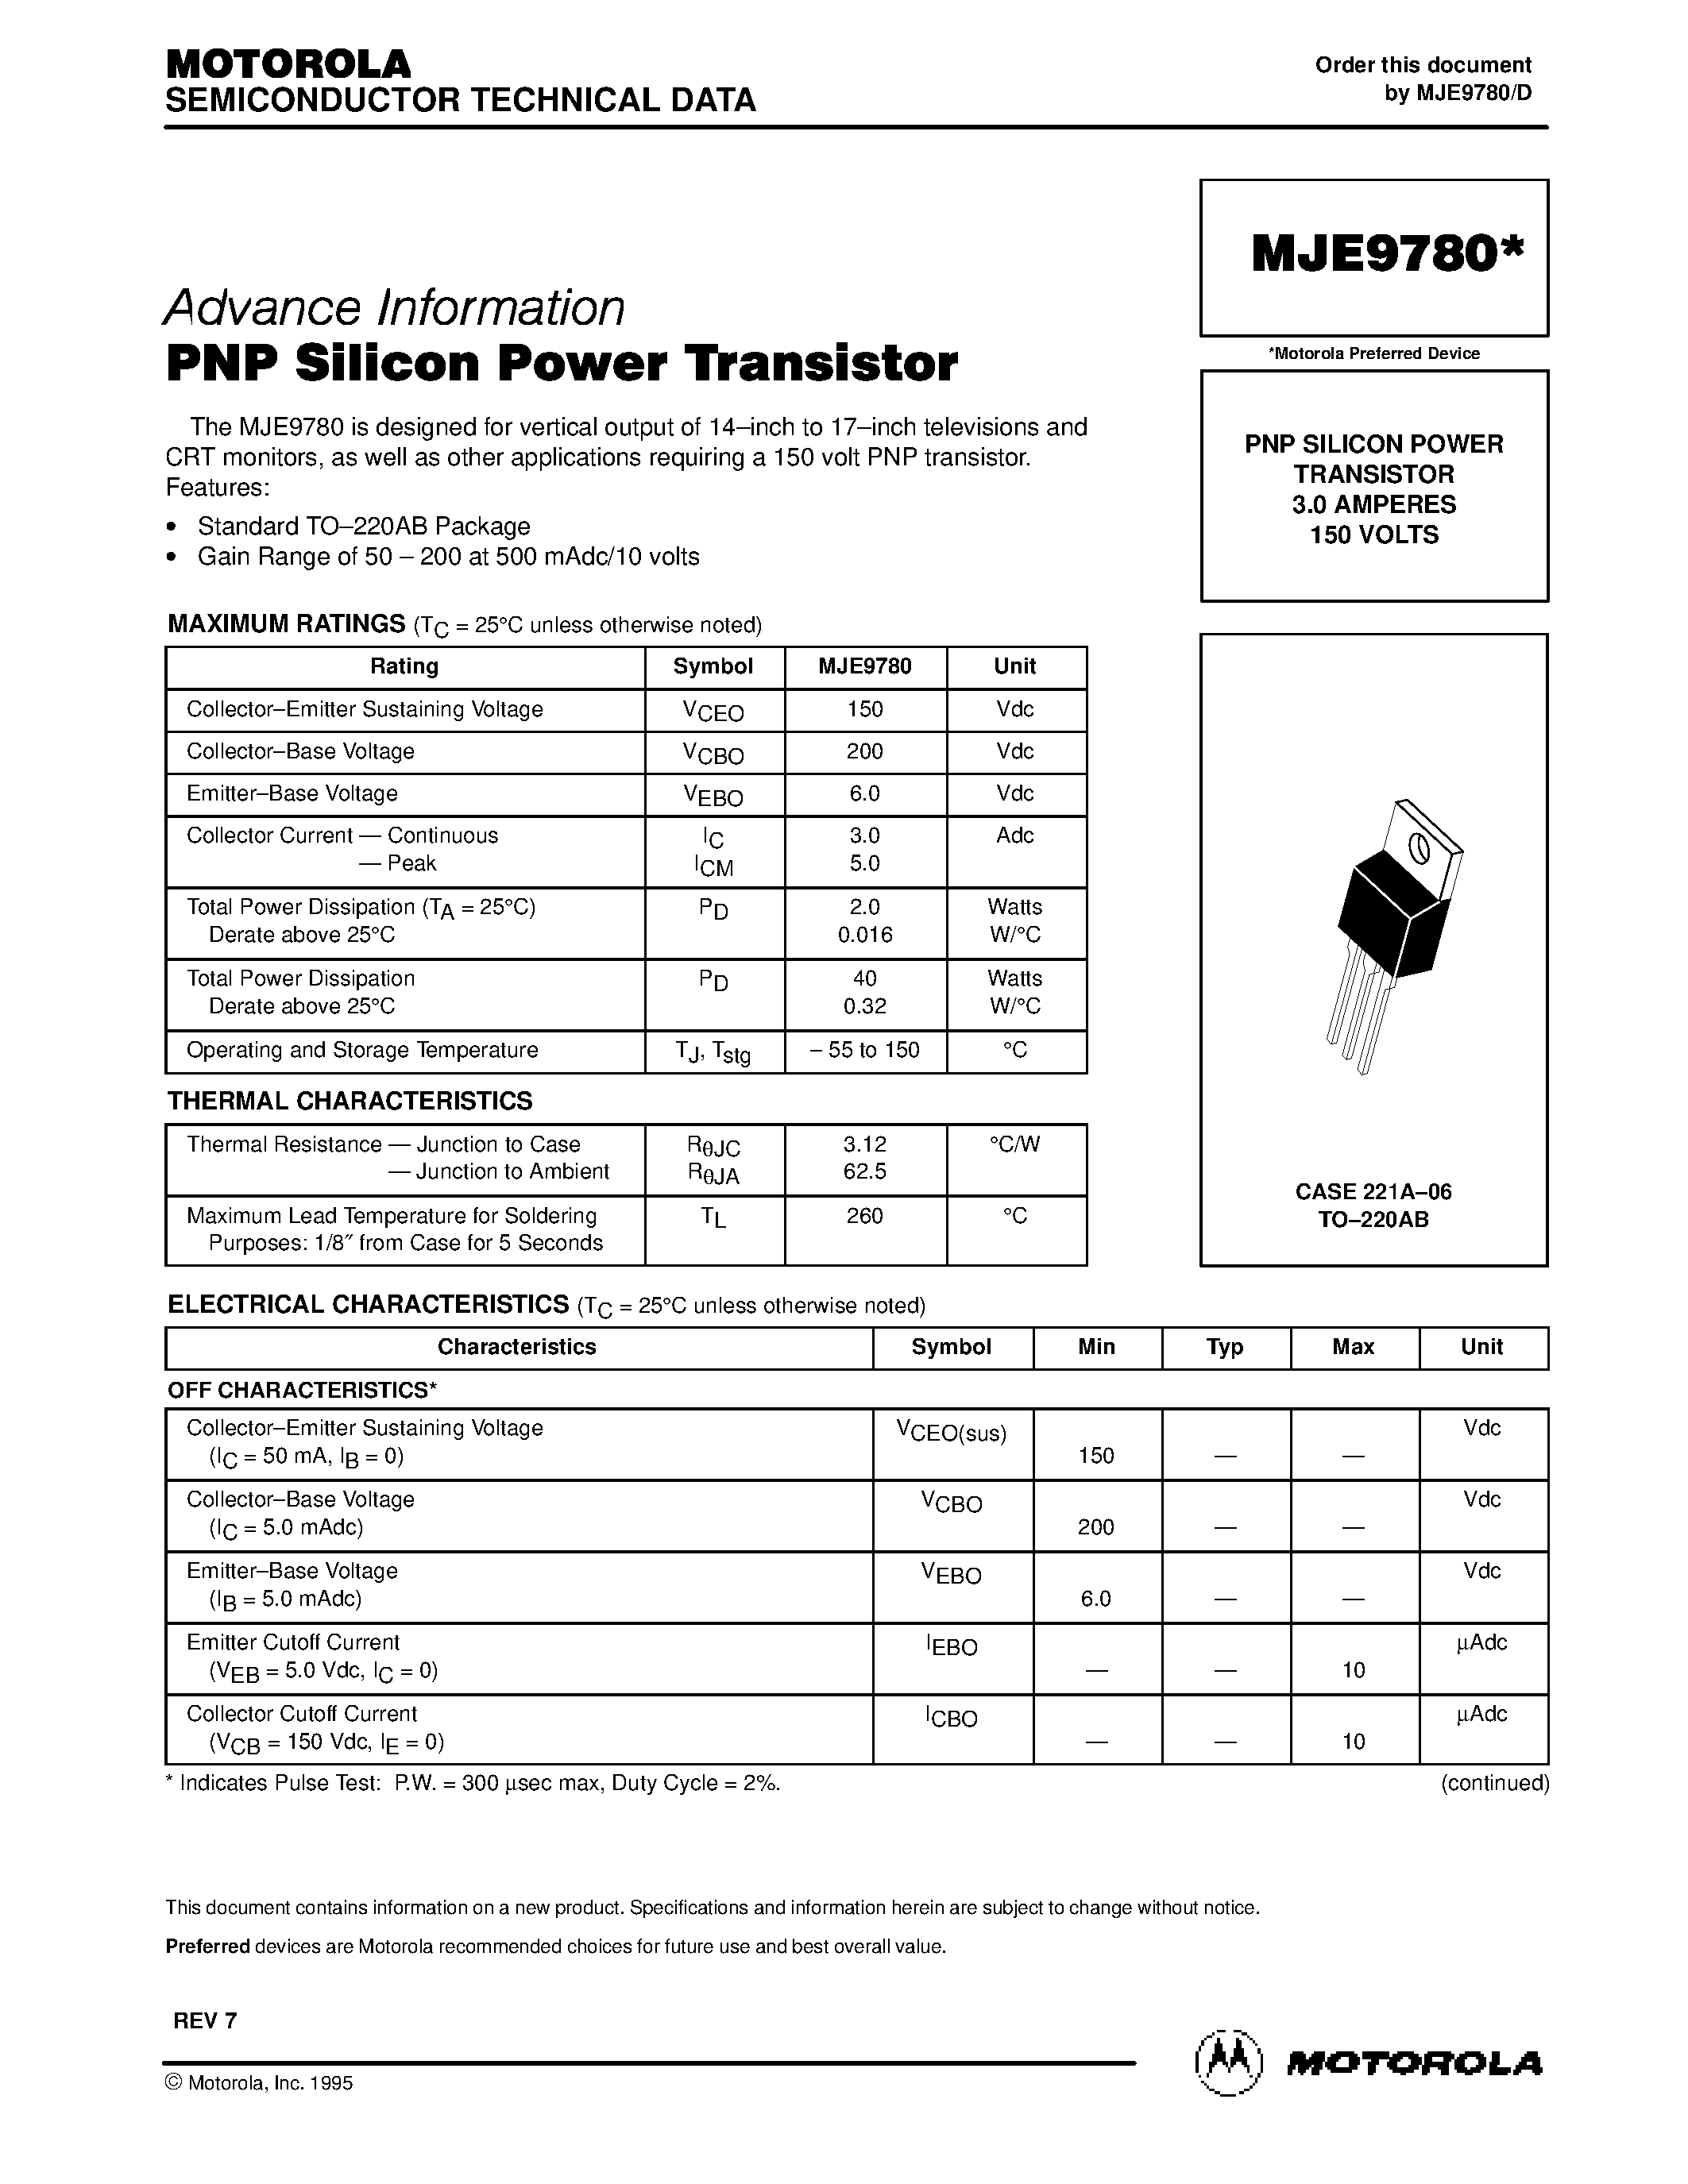 Даташит MJE9780 - PNP SILICON POWER TRANSISTOR 3.0 AMPERES 150 VOLTS страница 1